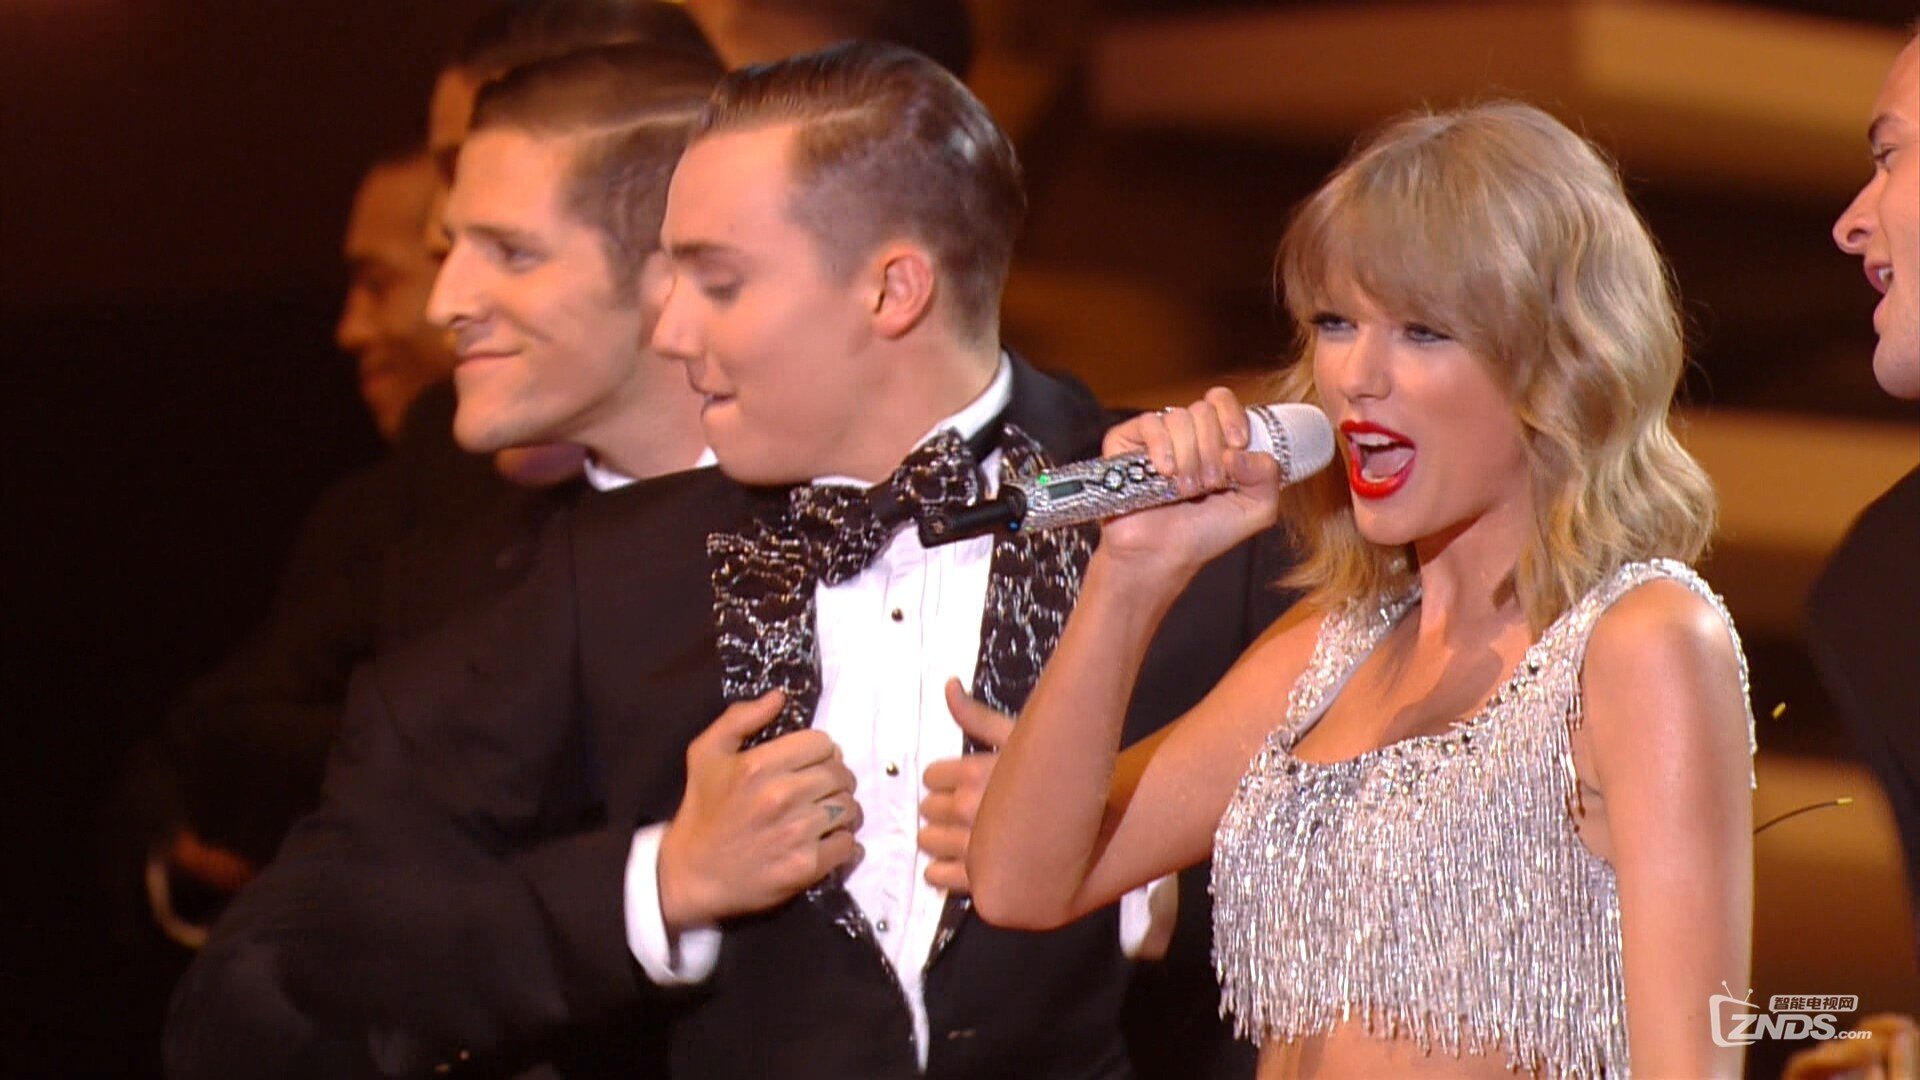 高清演唱会 Taylor Swift Shake It Off2014年vma颁奖典礼现场版4k资源交流znds